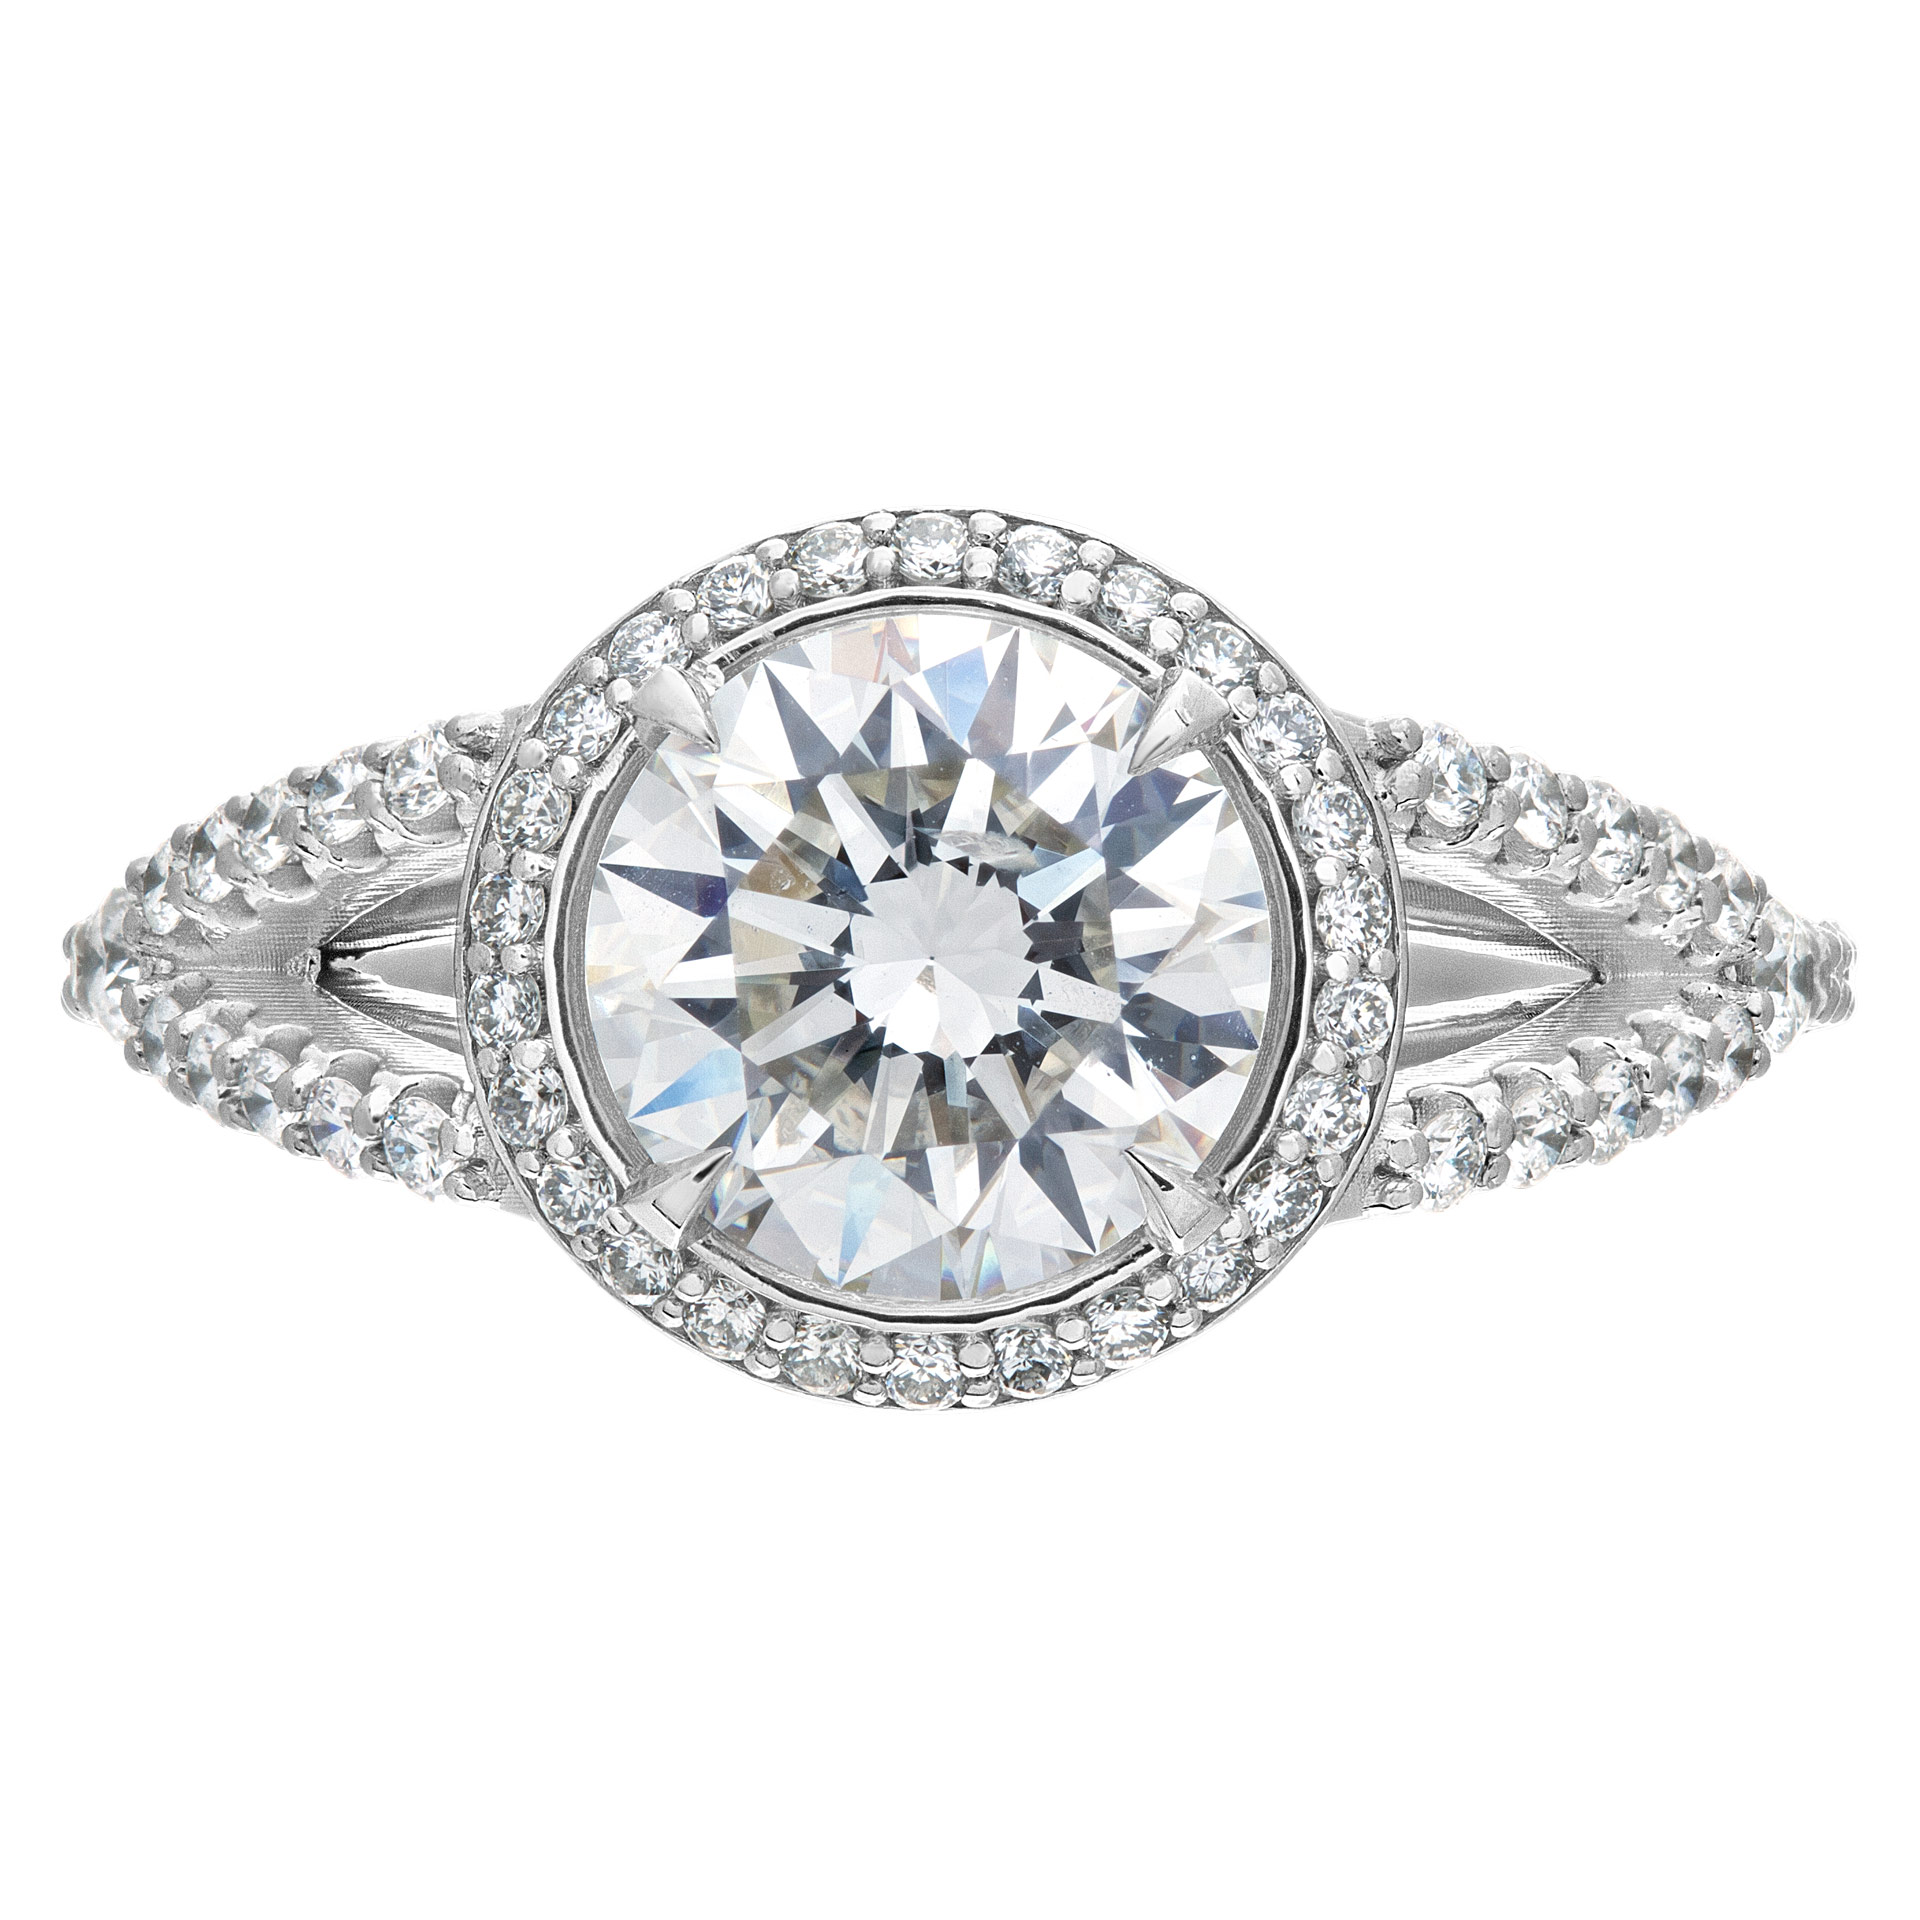 GIA cerified round brilliant cut diamond 1.81 carat (J color, SI2 clarity, Excellent symmetry) ring image 1